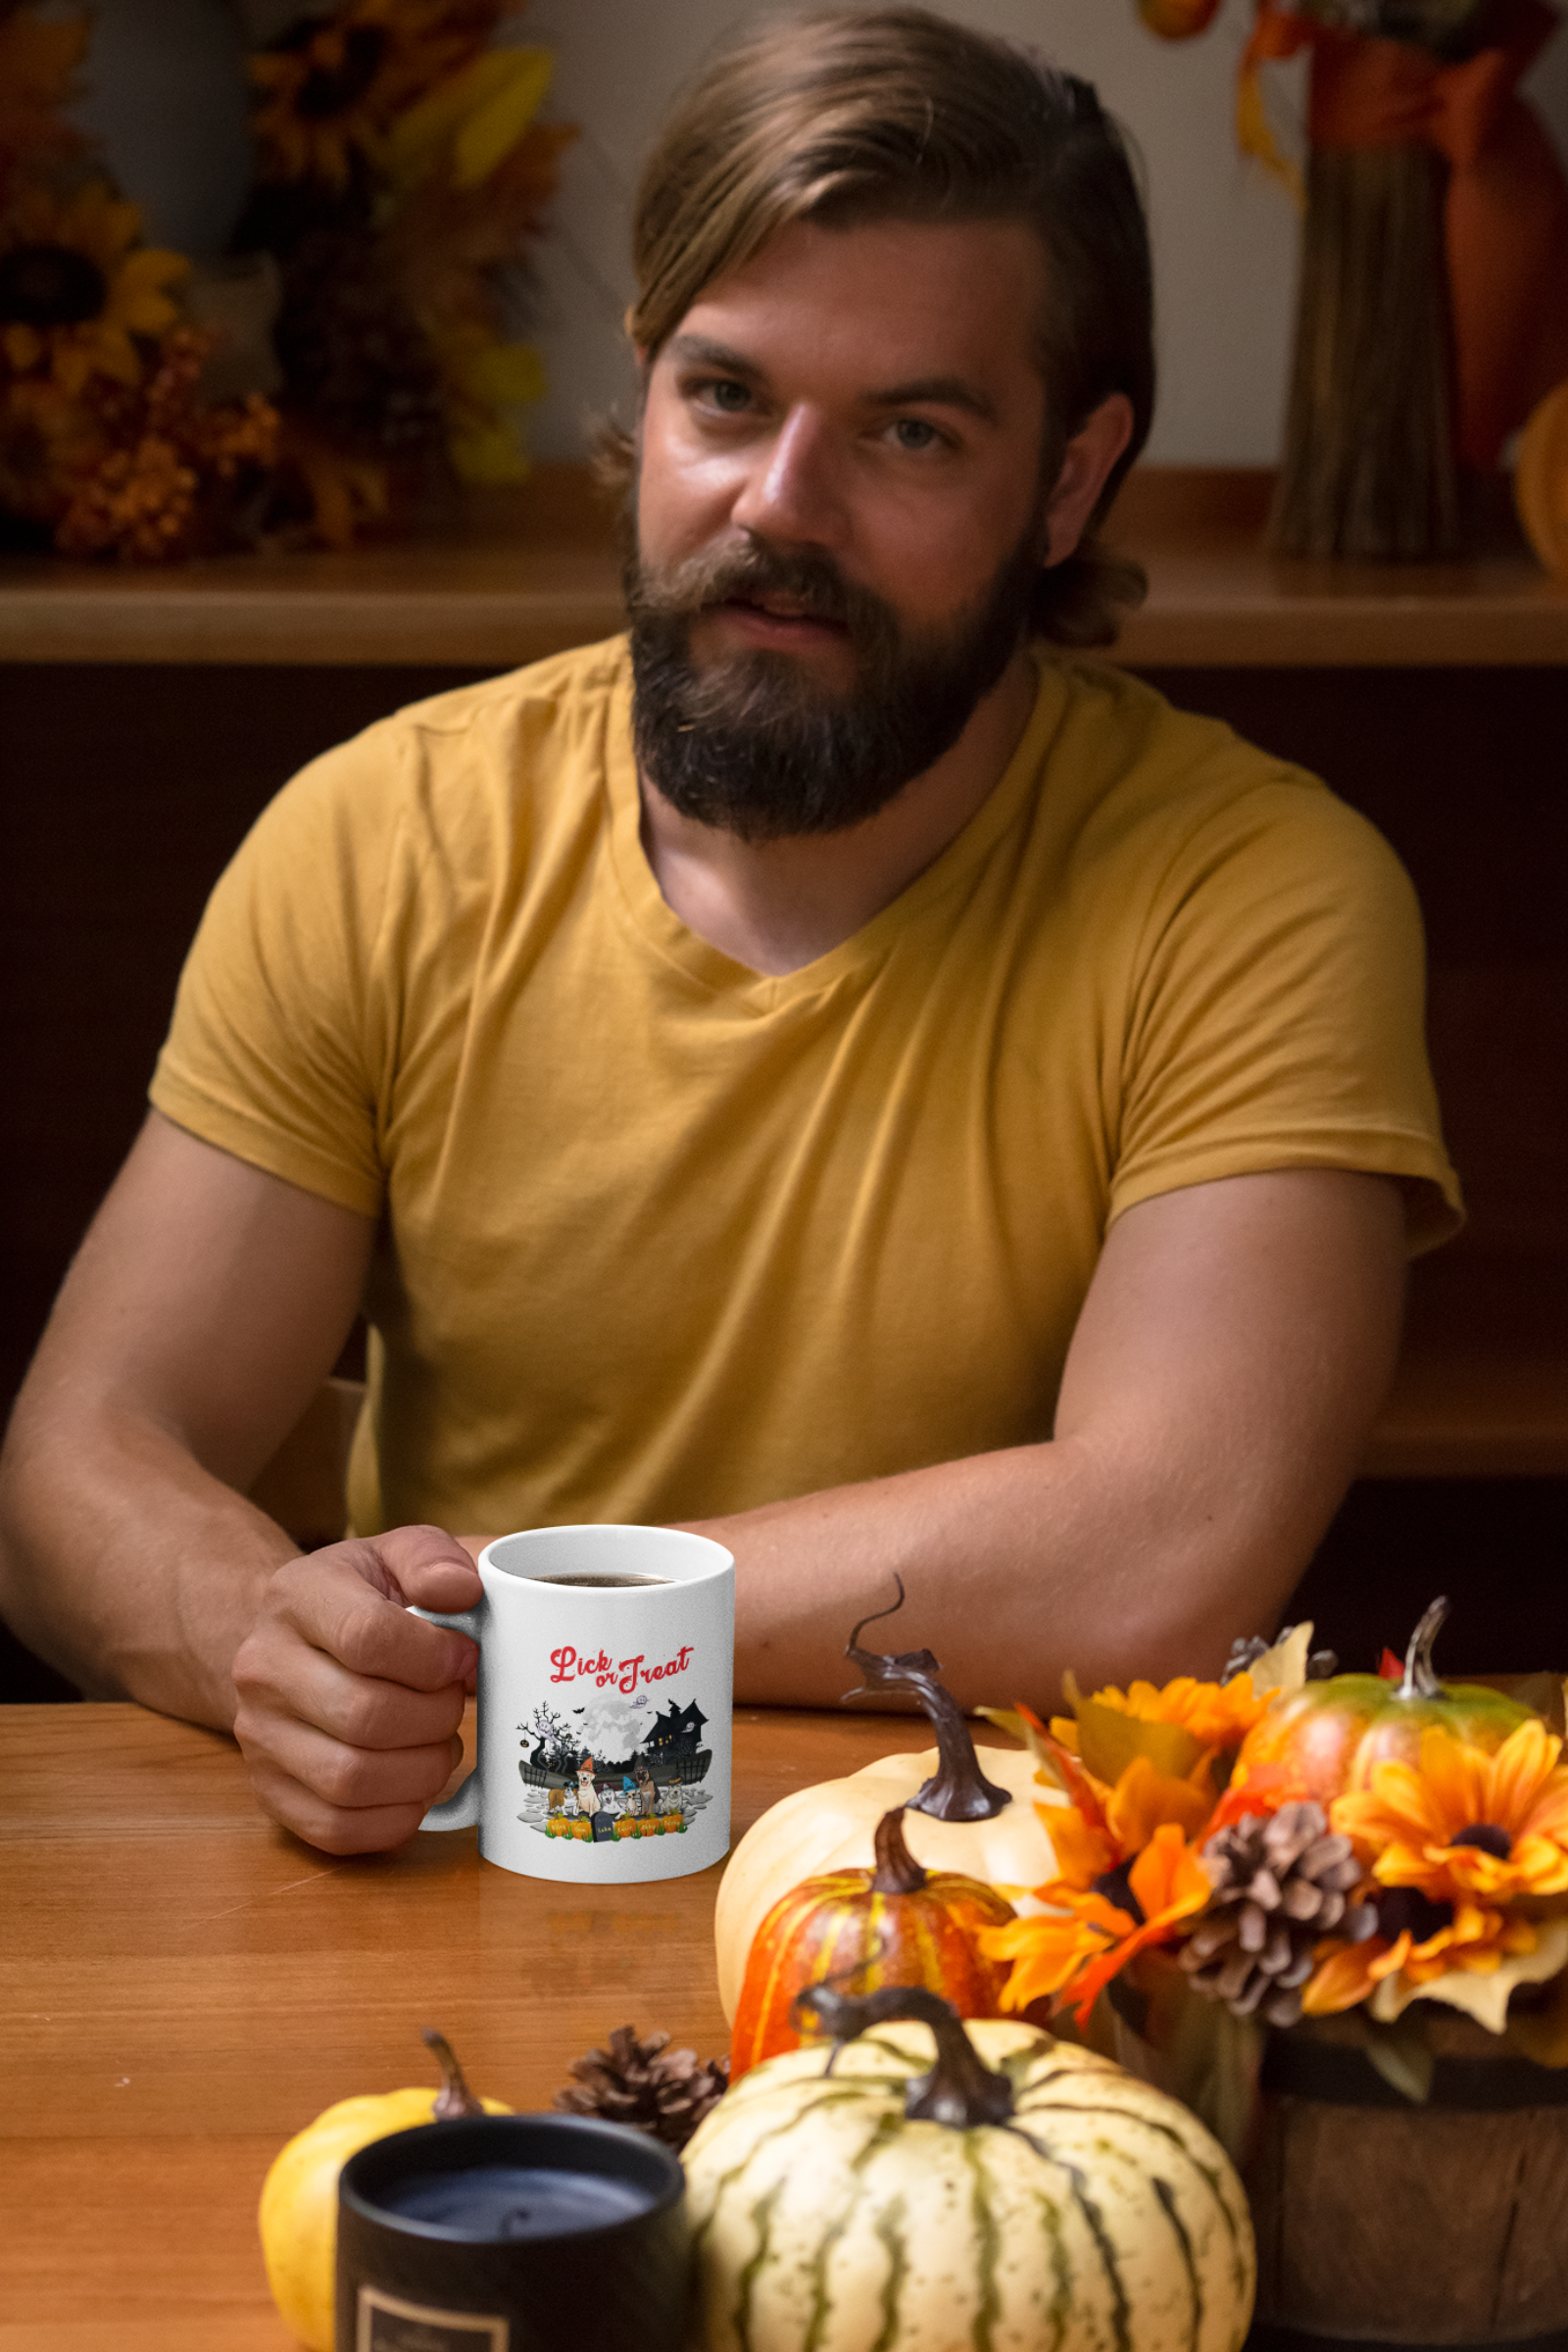 Halloween Themed Coffee Mug for Pet Lovers